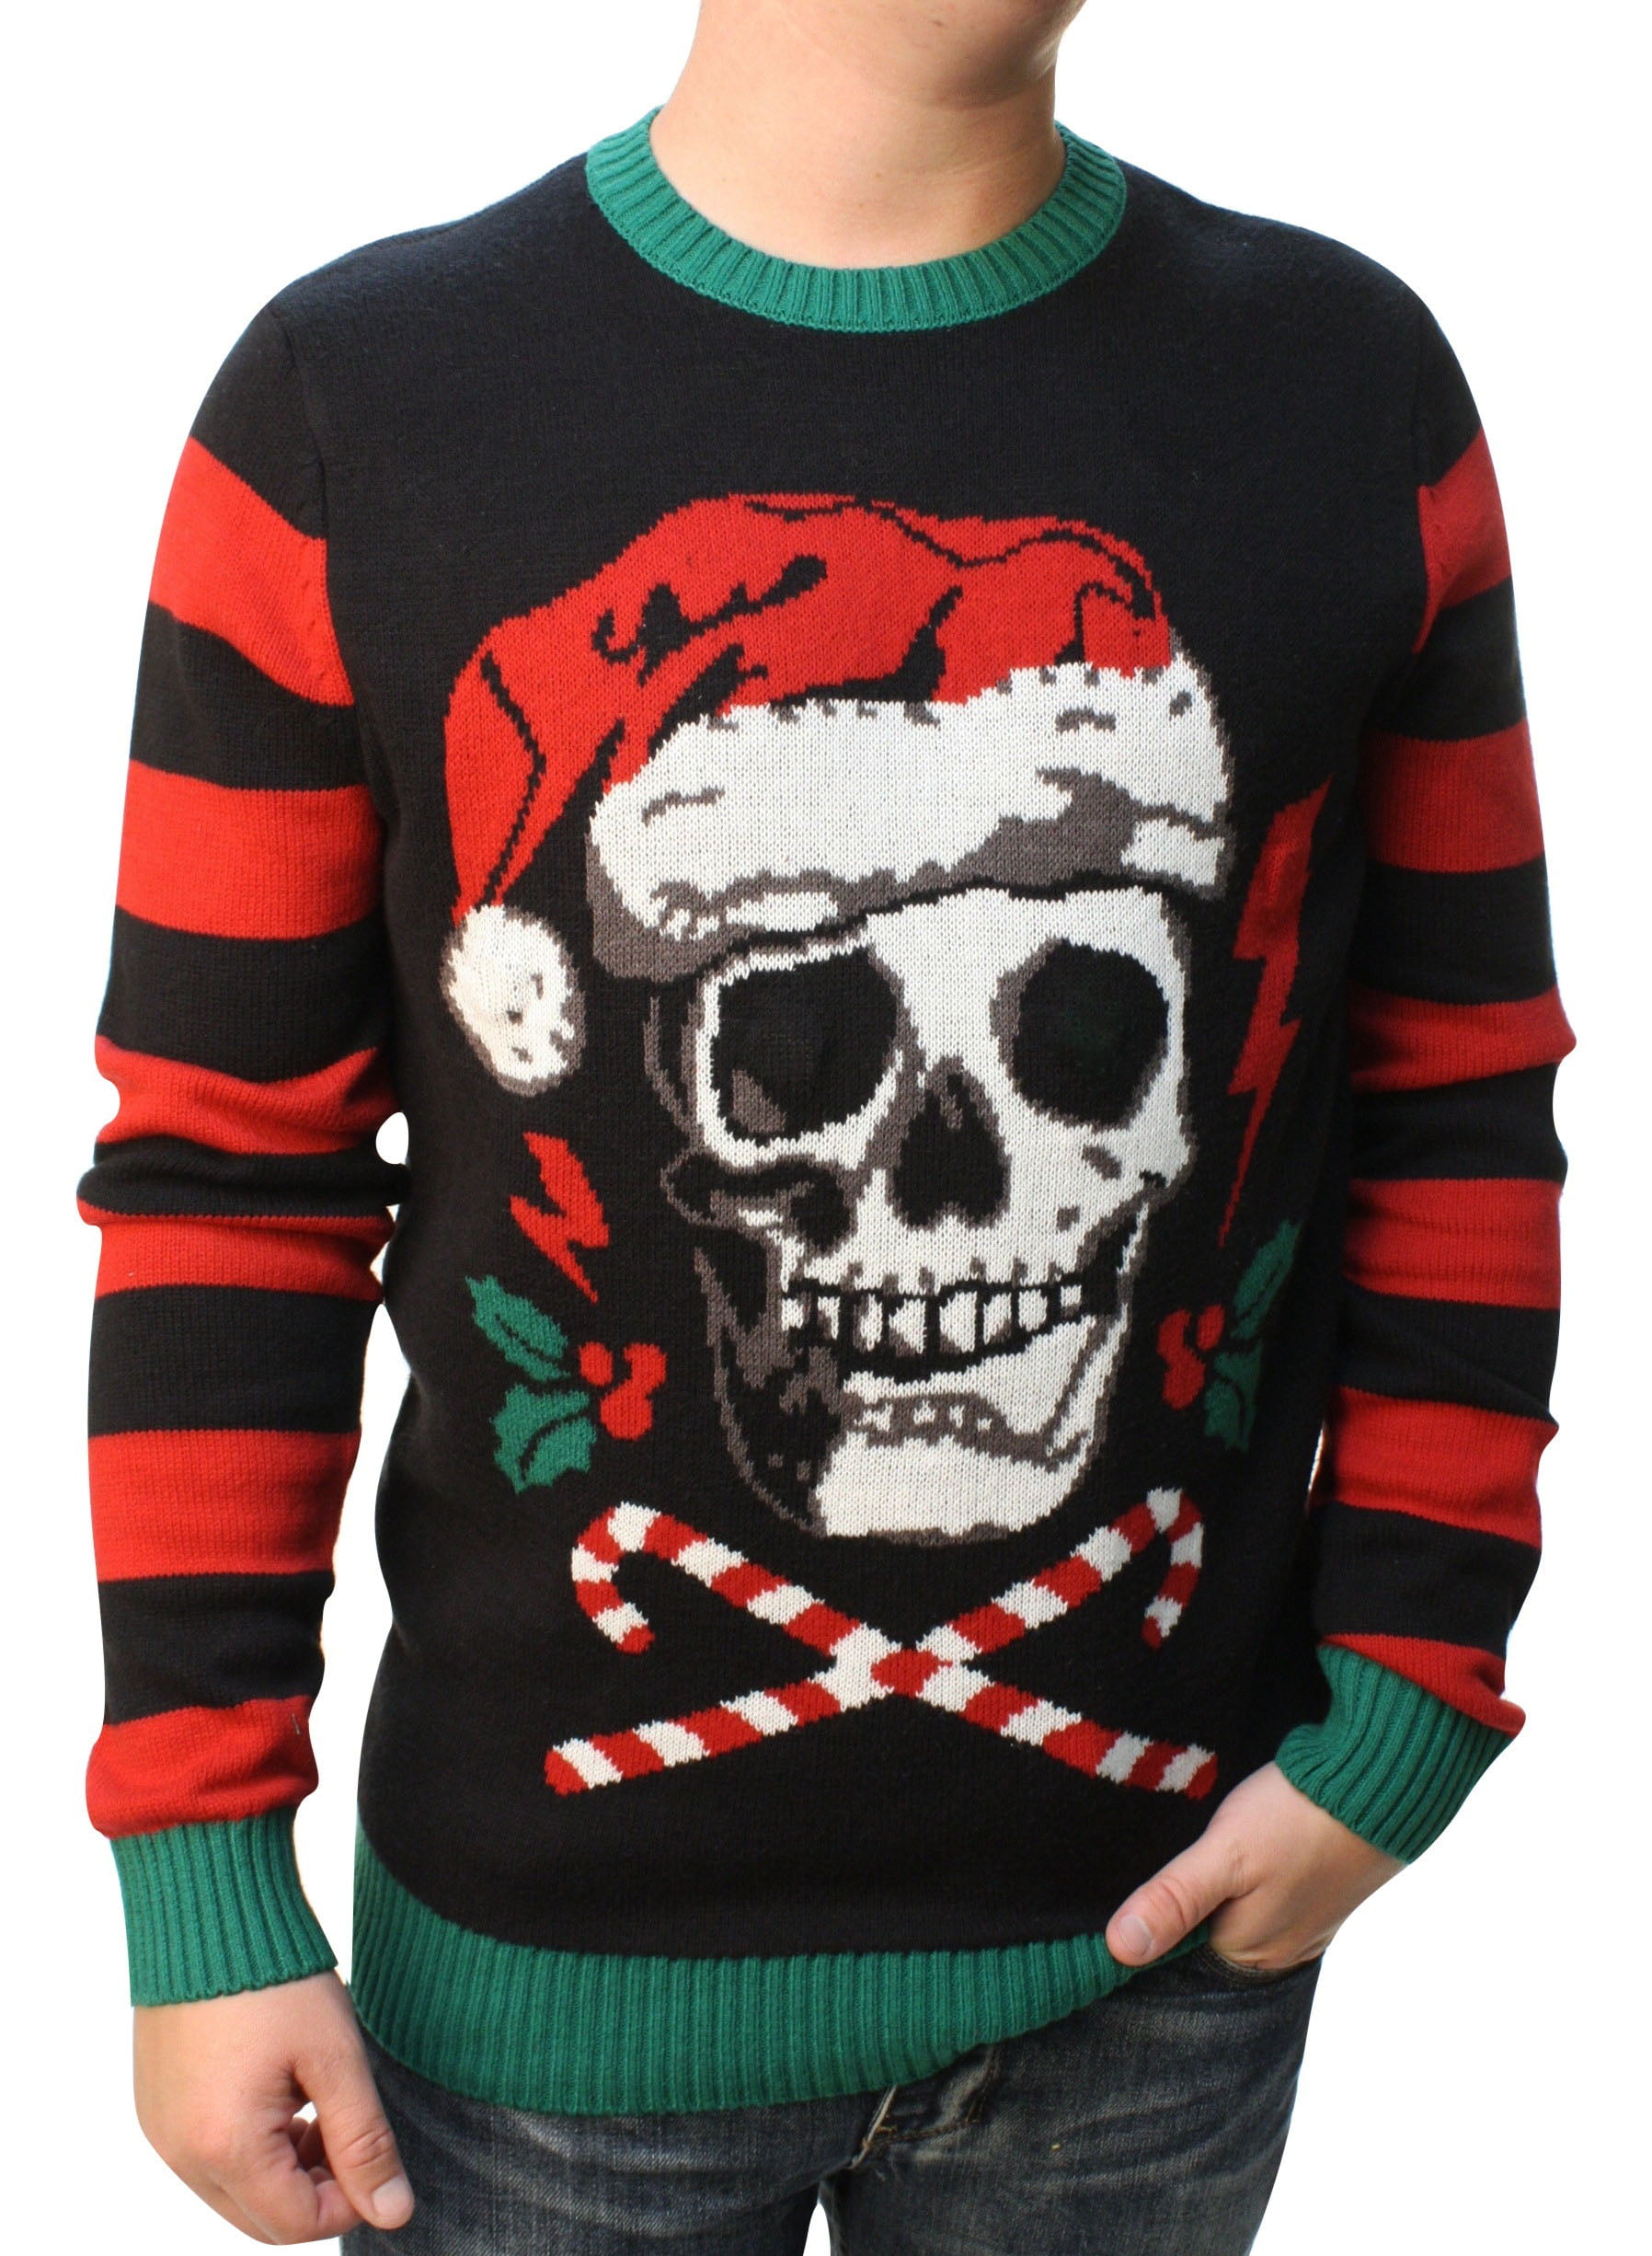 Santa Skull and Cross Bones Christmas Childrens Kids Sweatshirt Jumper 